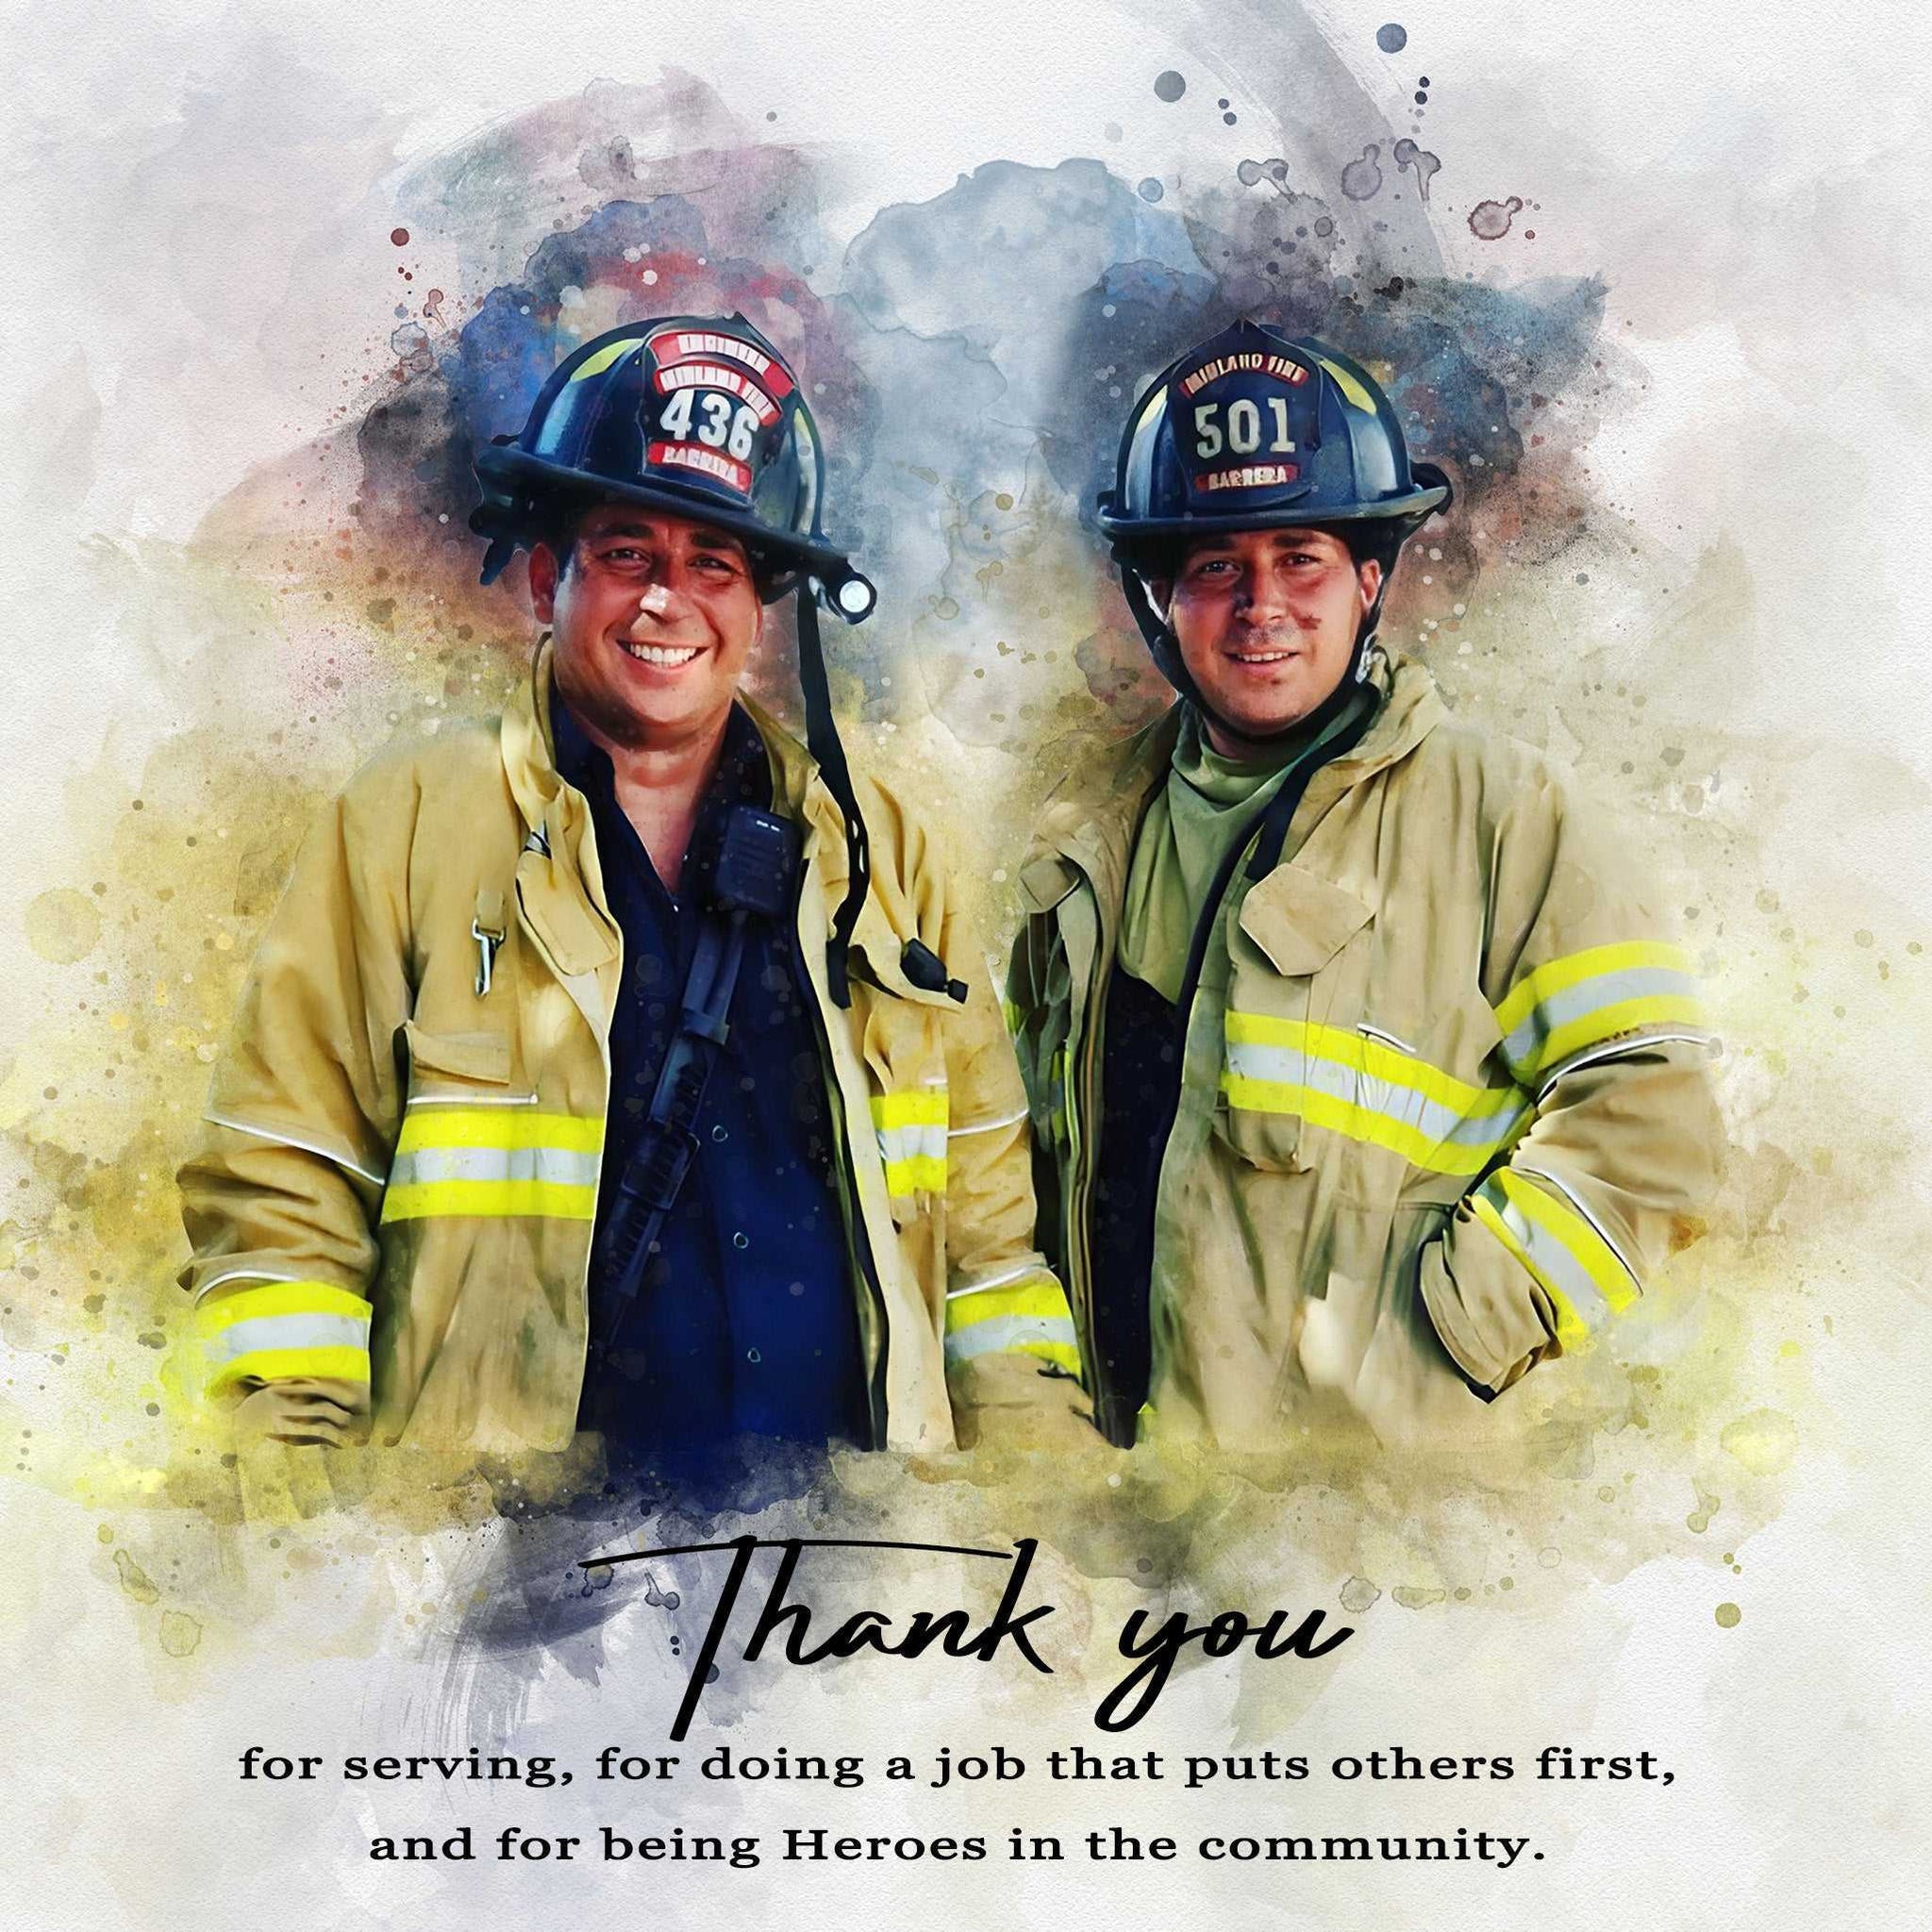 Firefighter Gift | Fireman Gifts | Fire Department Gifts | Firefighter Retirement Gifts | Firefighter Presents Ideas - FromPicToArt